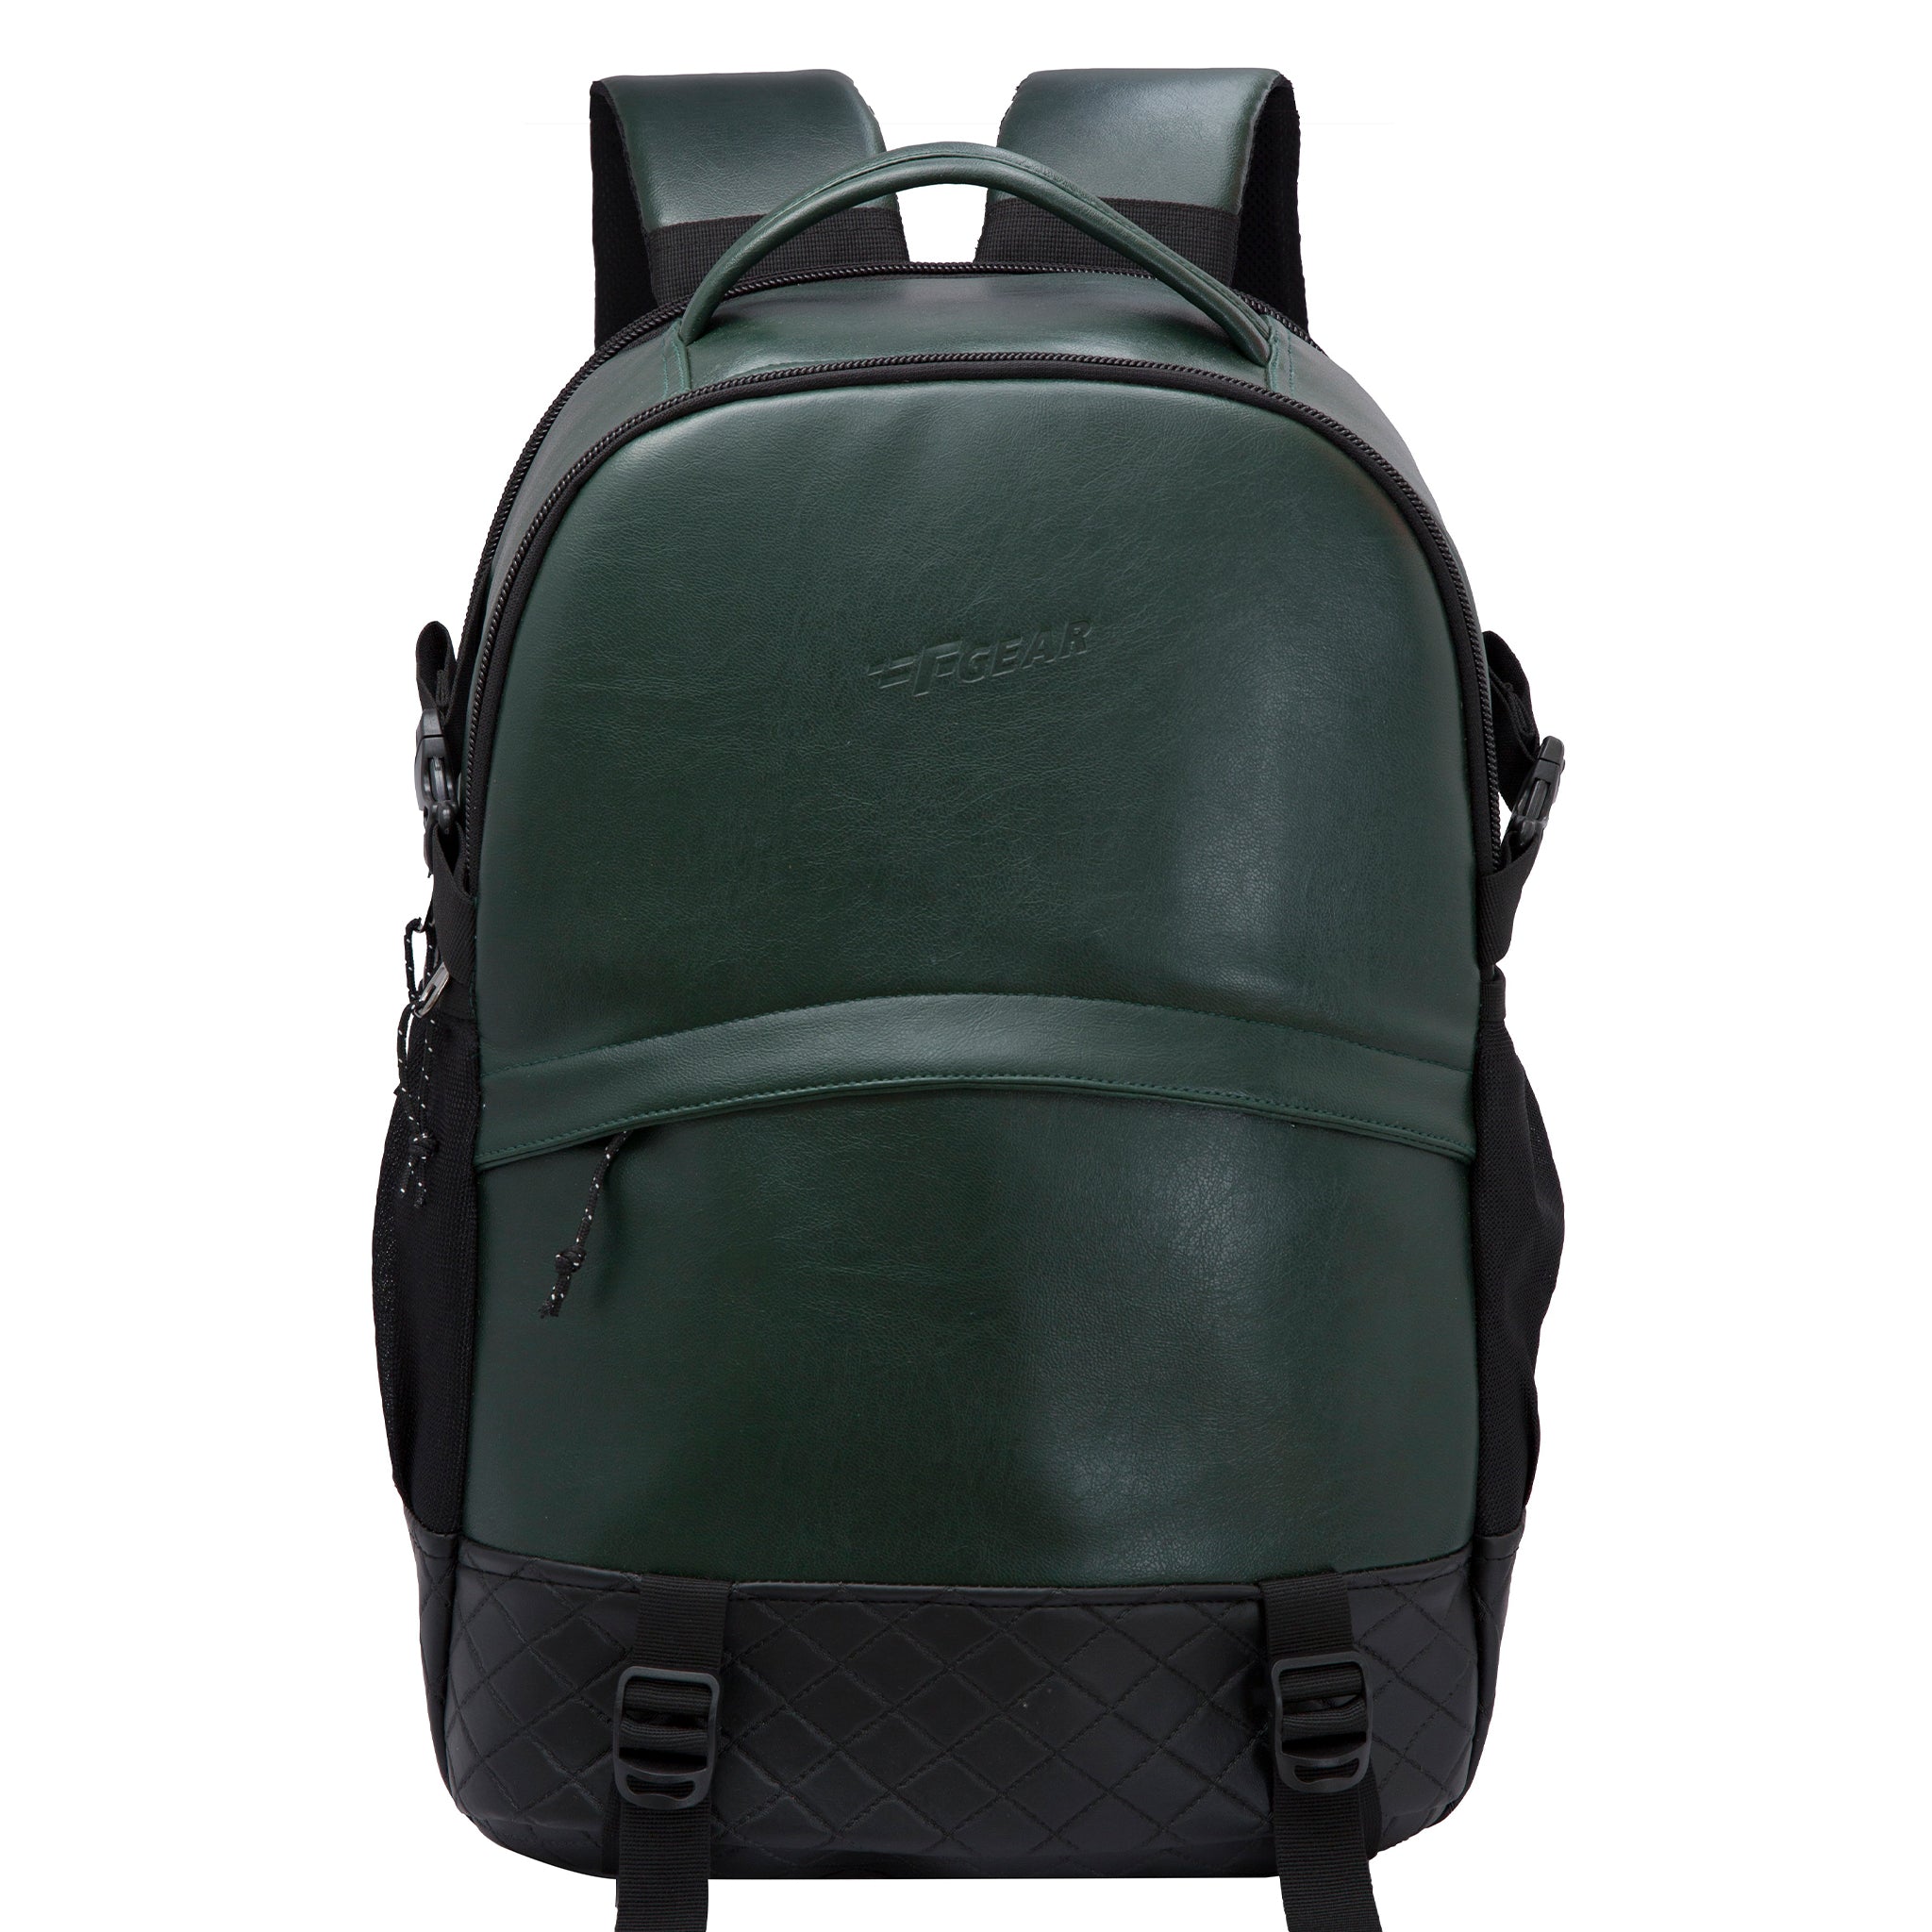 Caprese Liney Handbag Medium Green 4 L Backpack Green - Price in India |  Flipkart.com